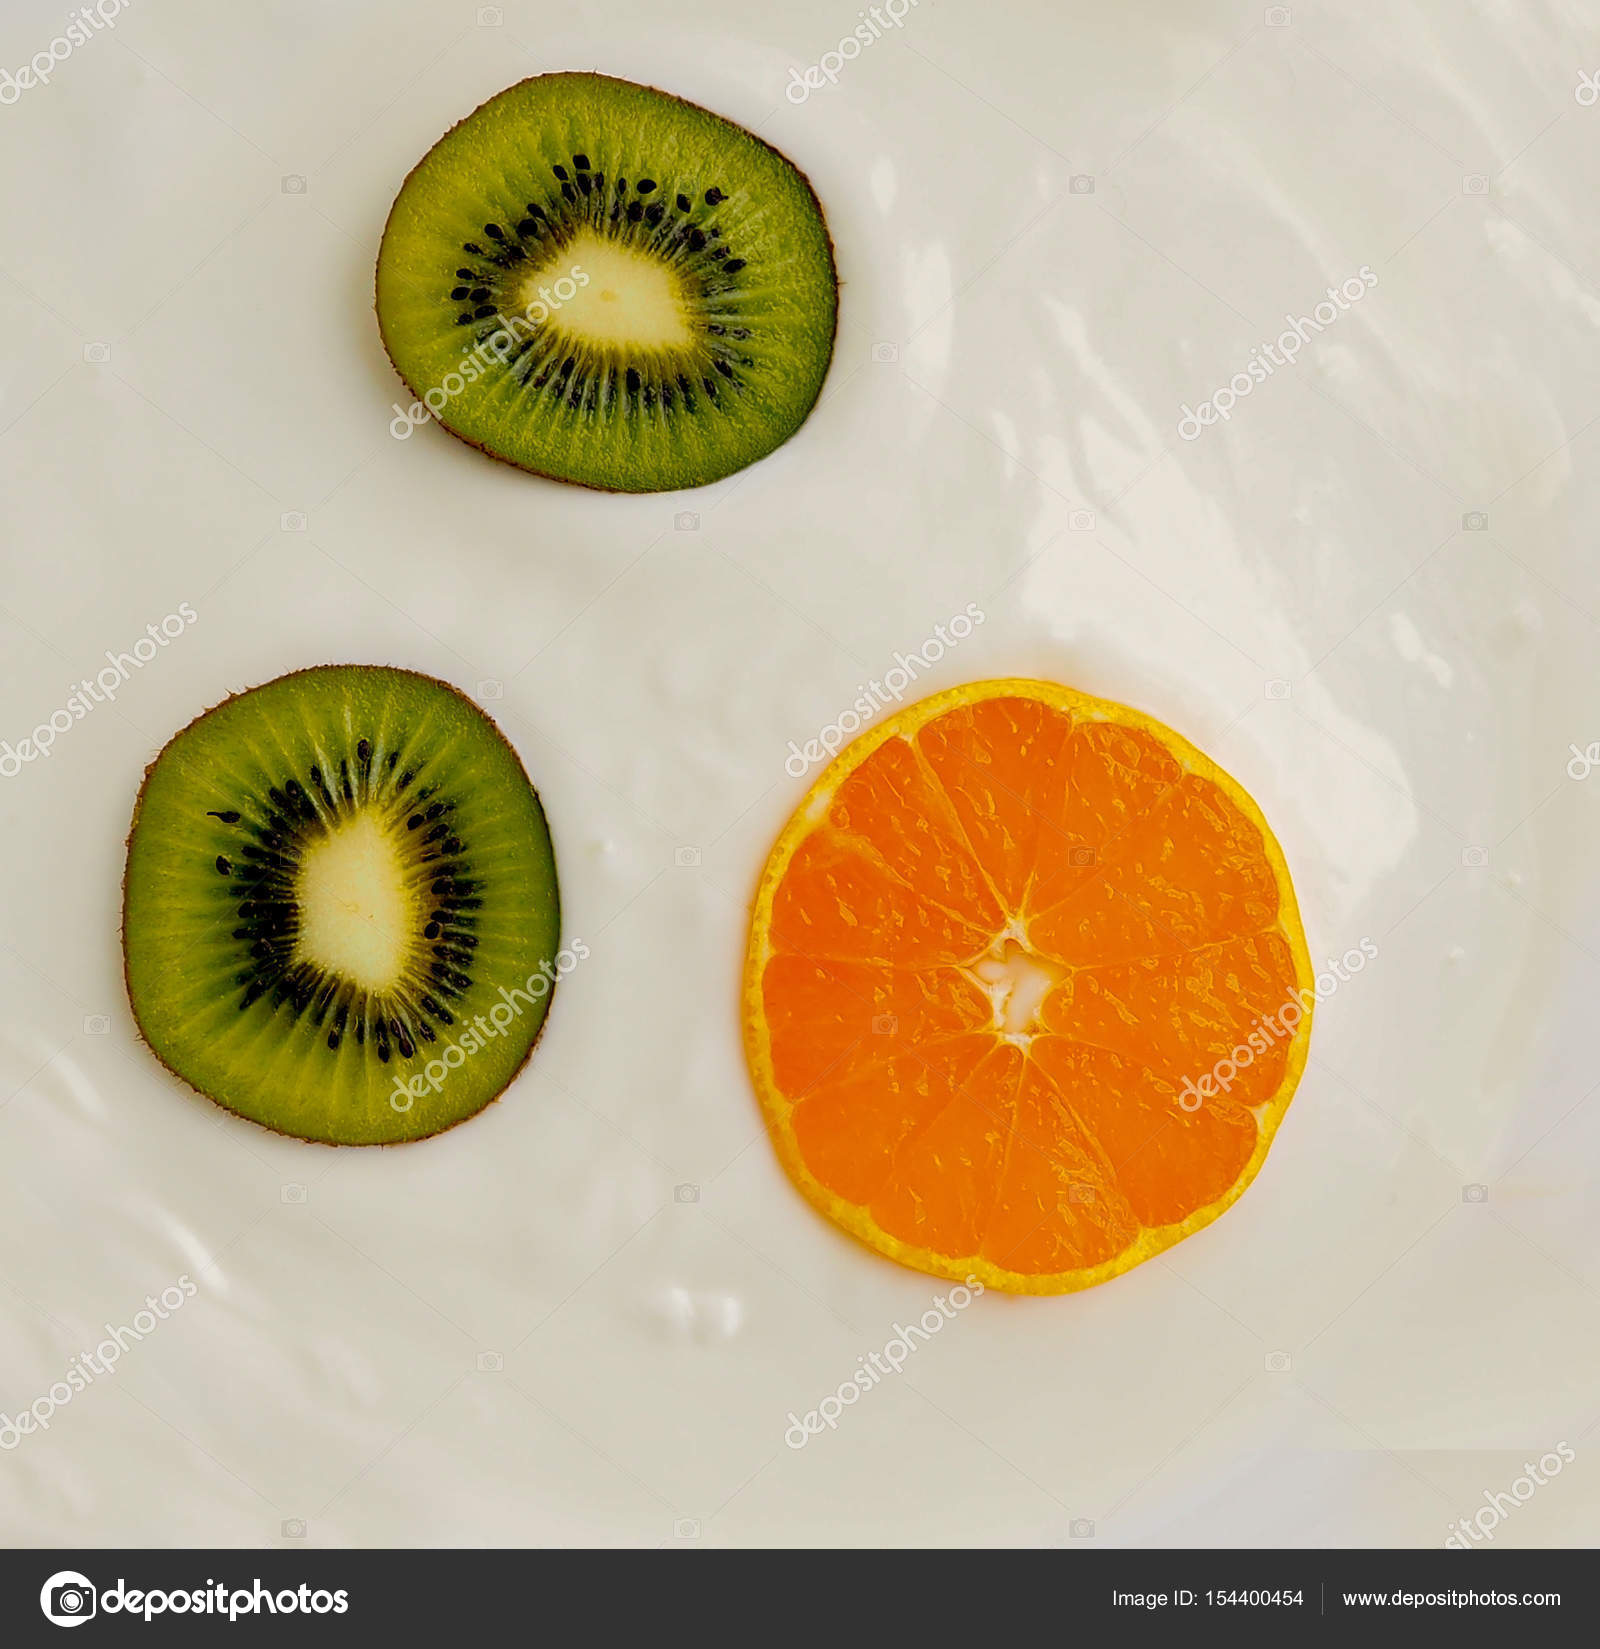 orange tangerine and kiwi closeup of white cream with a texture as a ...